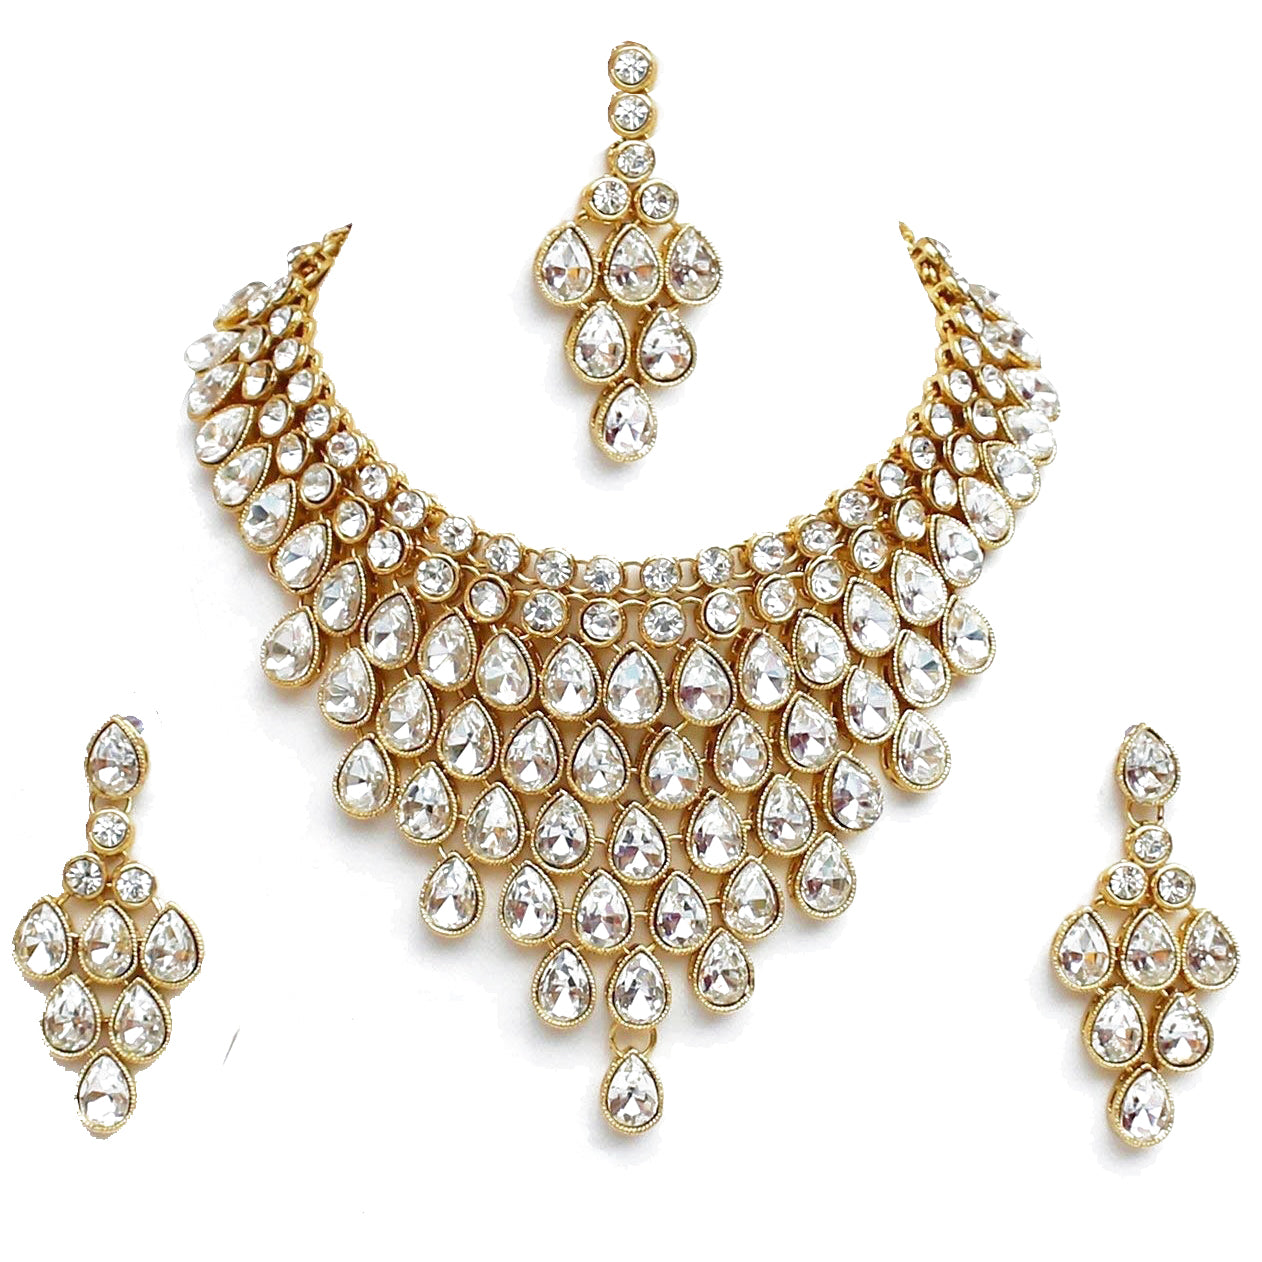 Stylist 3 piece Necklace set, earrings and bindi